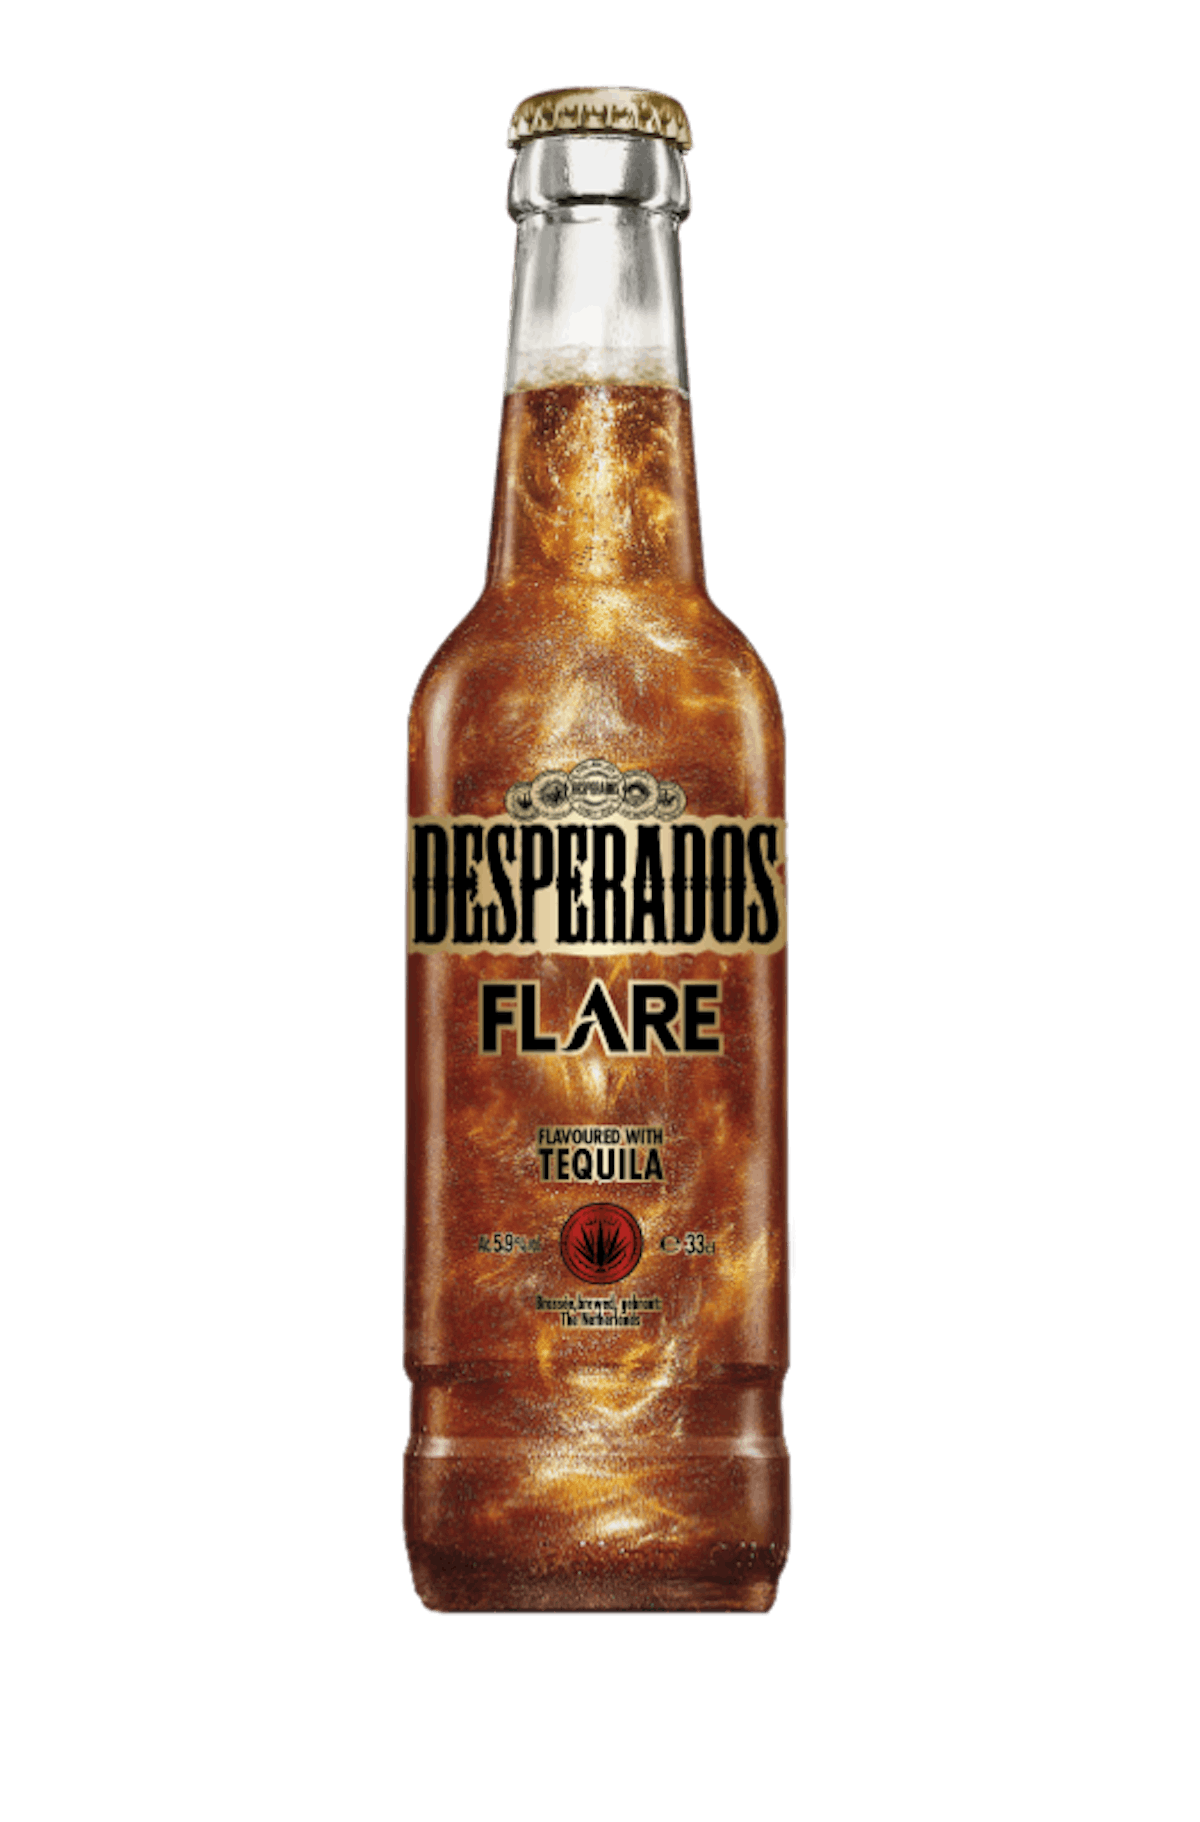 Desperado tequila flavored beer for guests in 2023